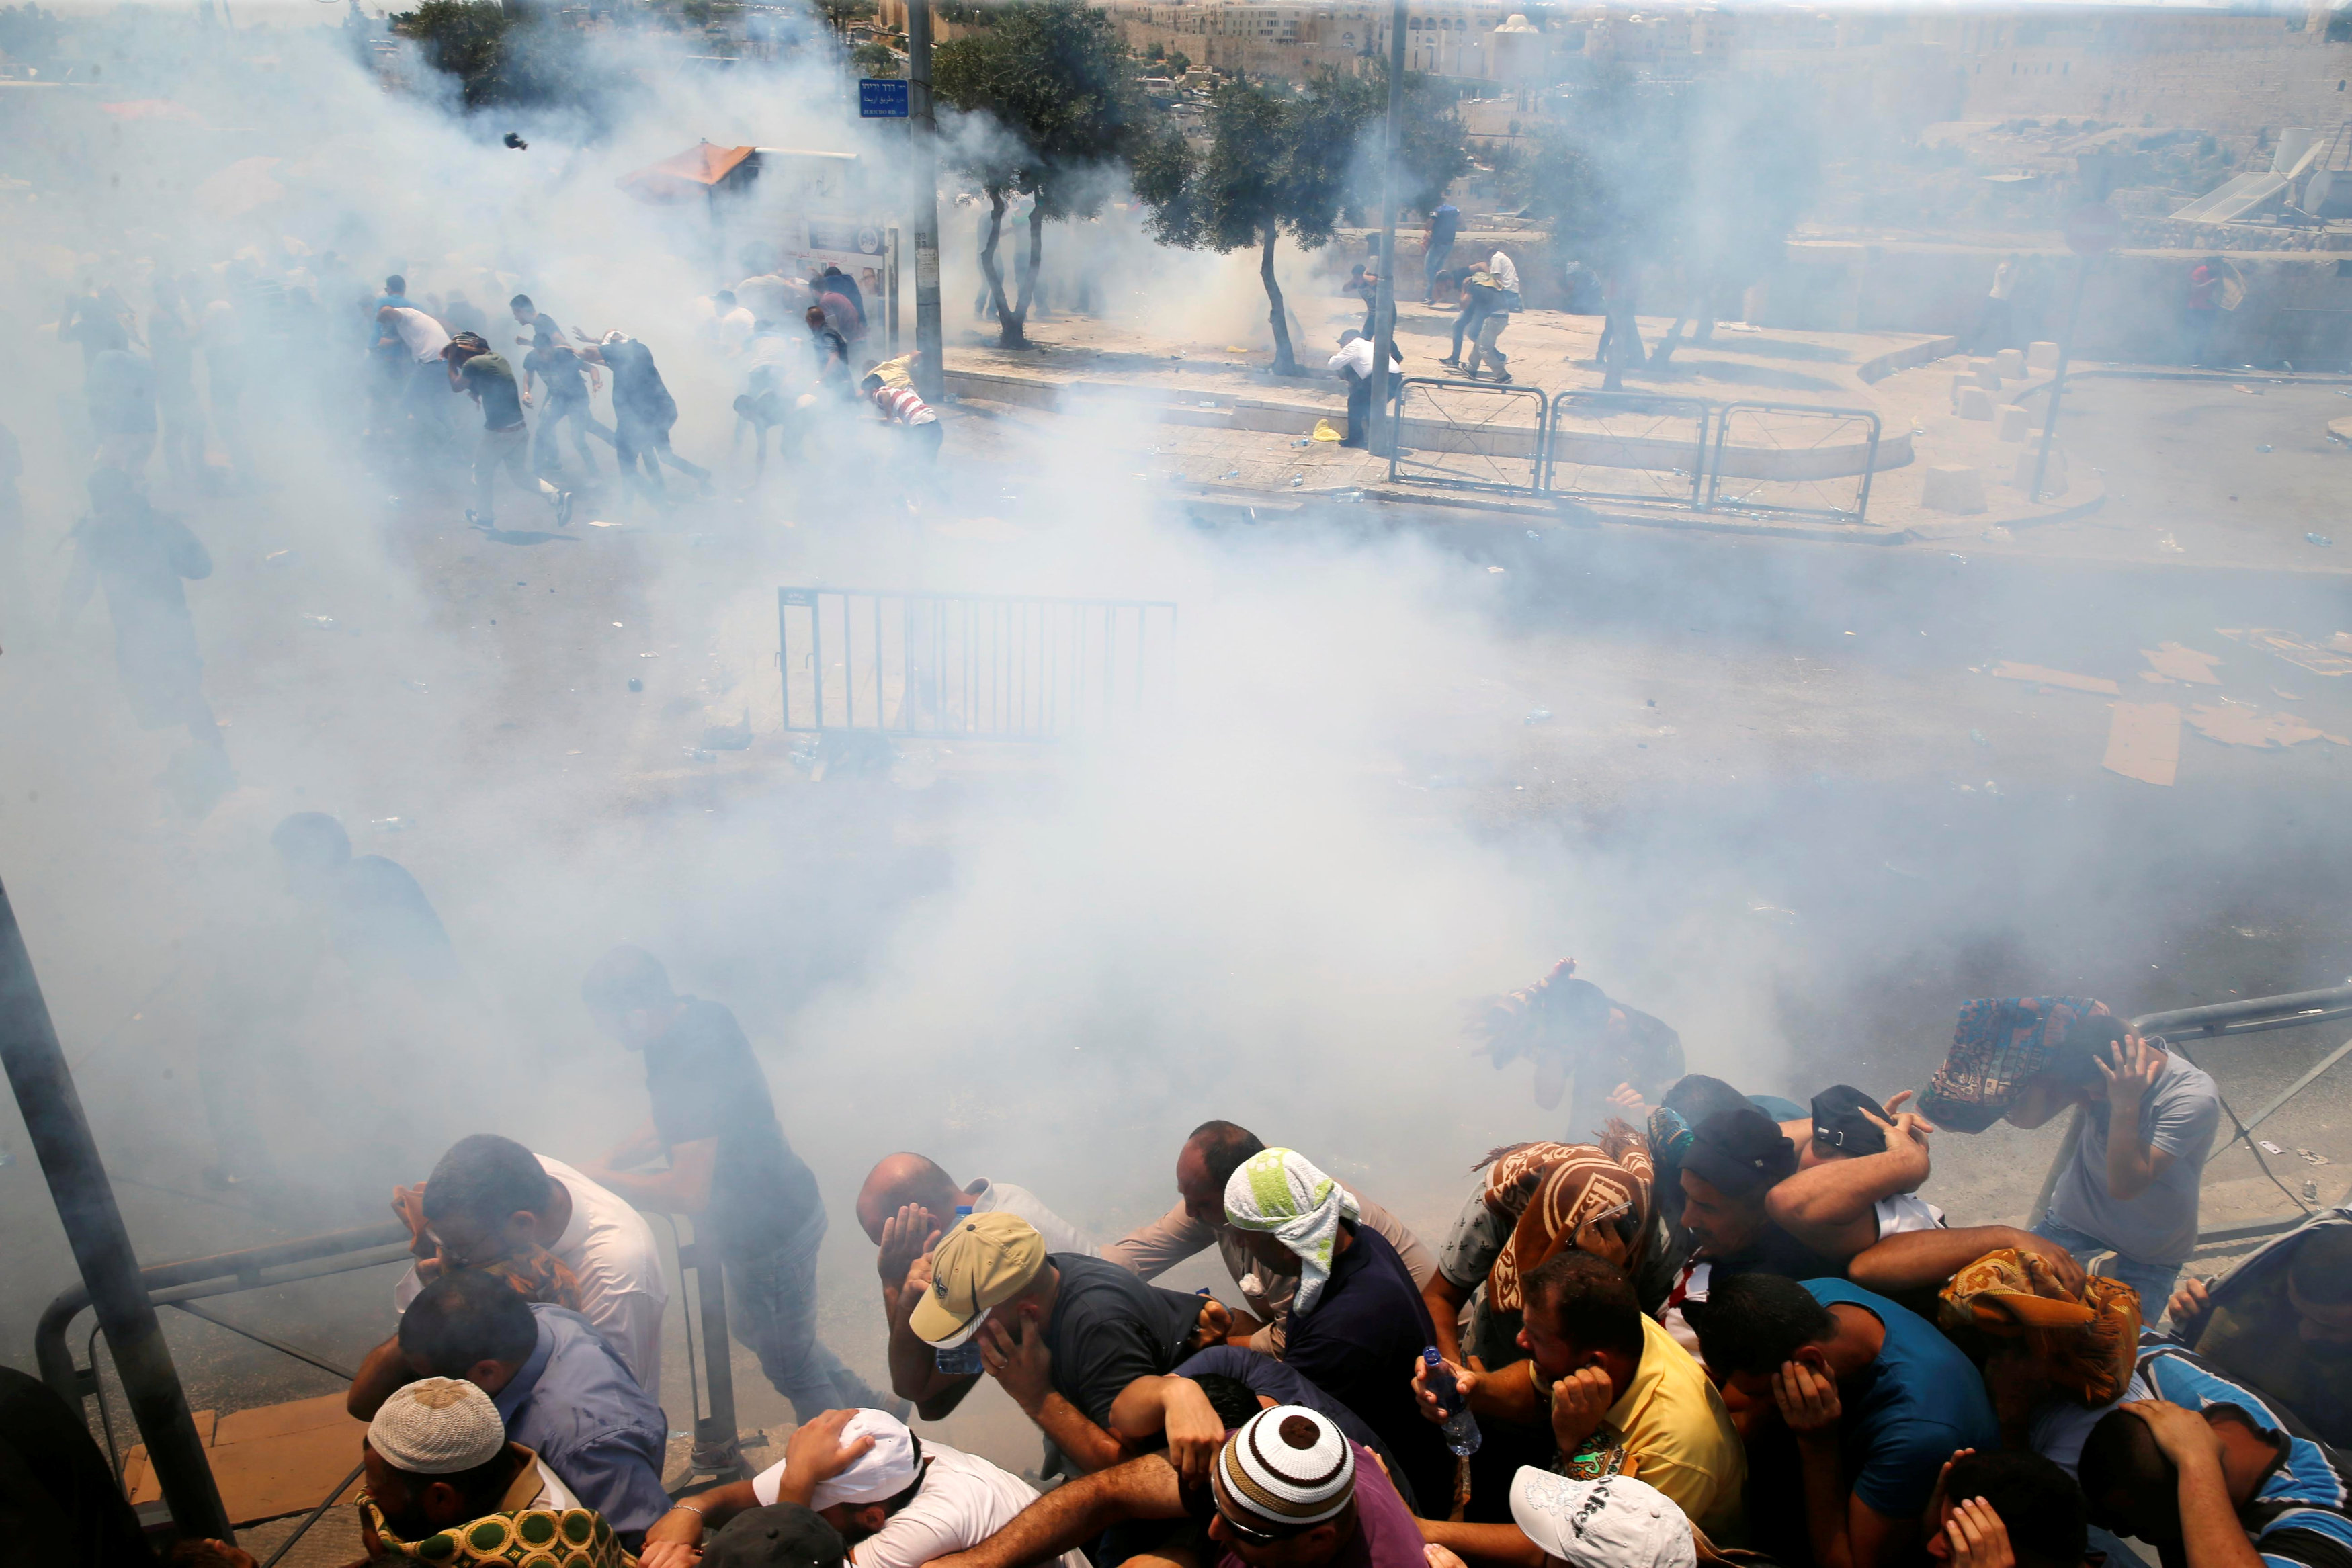 İsrail polisi Müslümanlara saldırdı